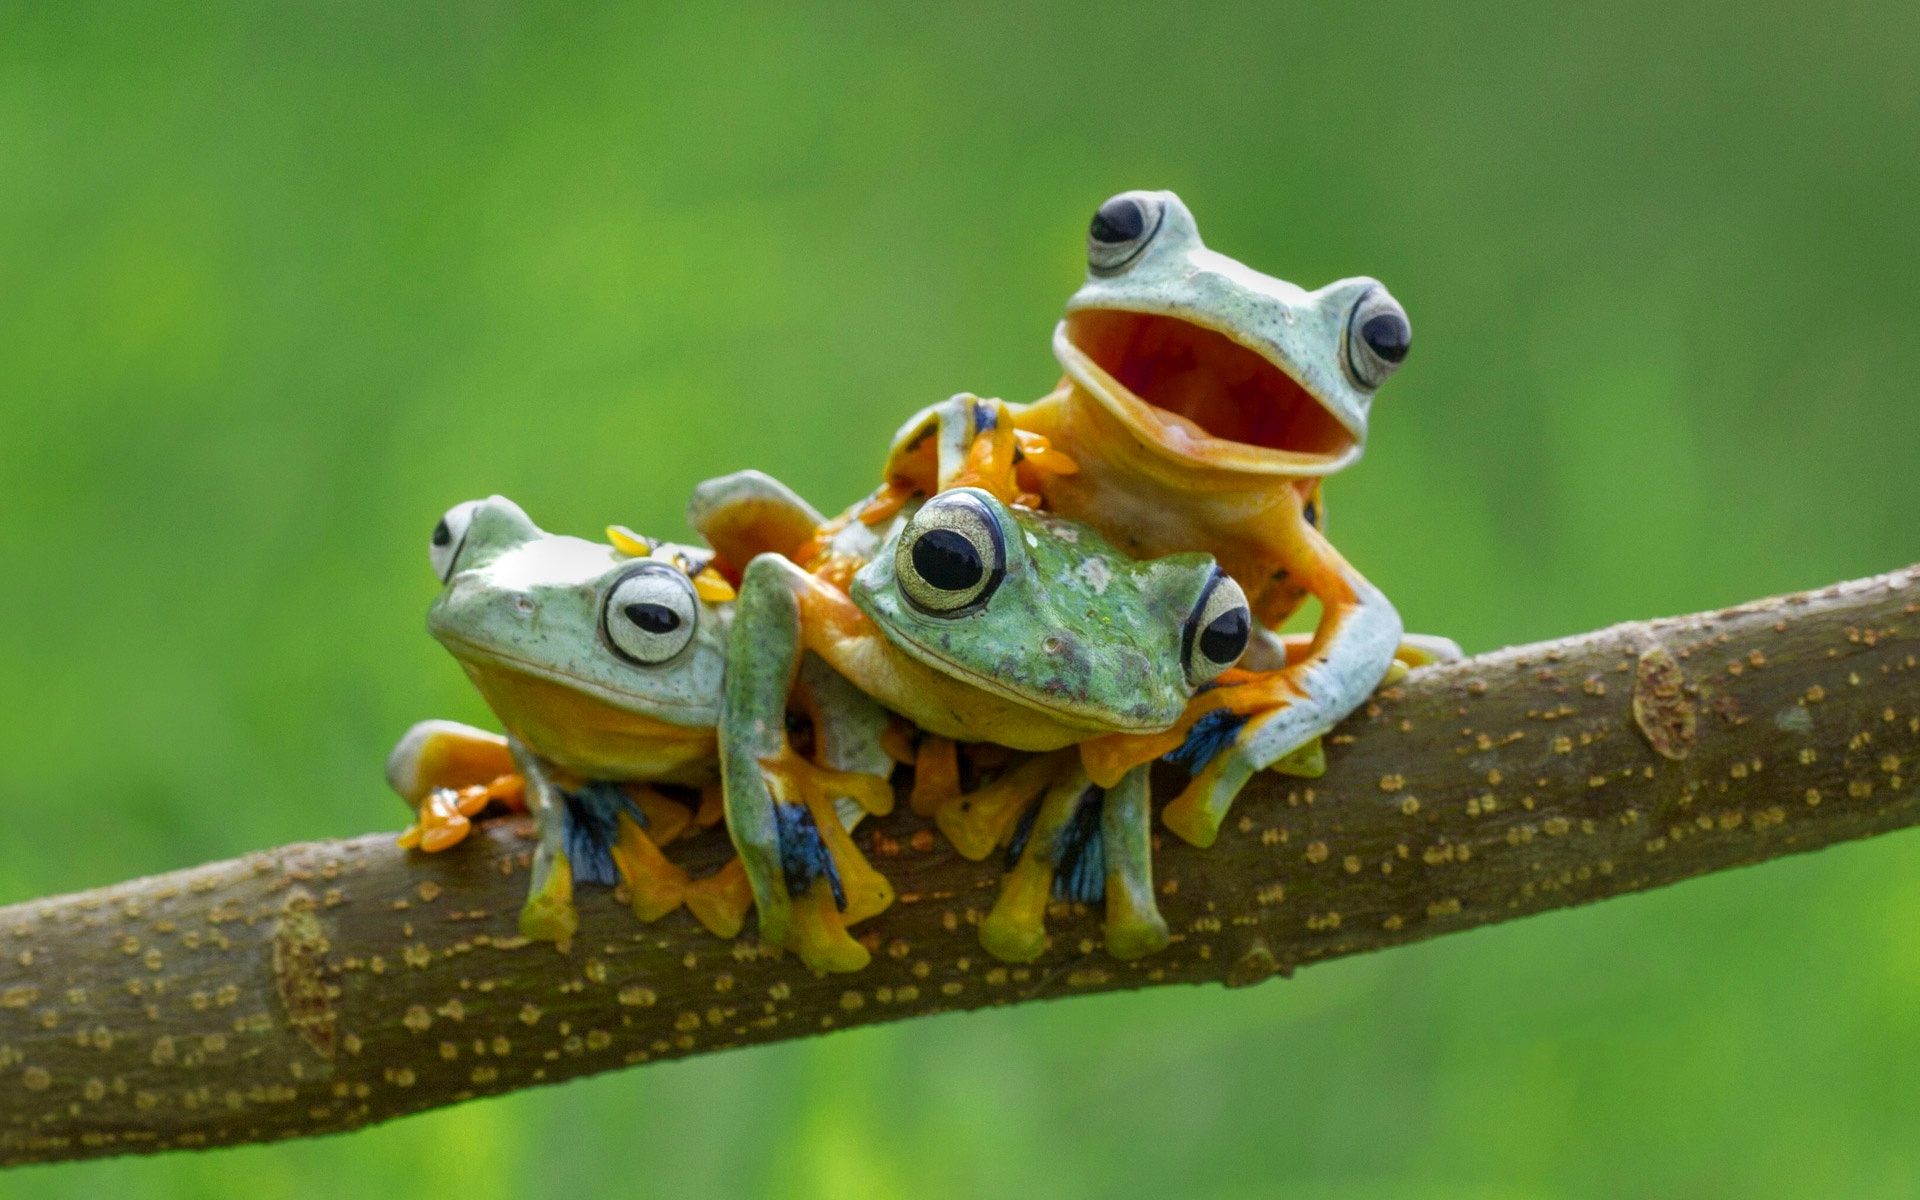 Cute Frogs HD Wallpaper Download For Desktop amp Mobile